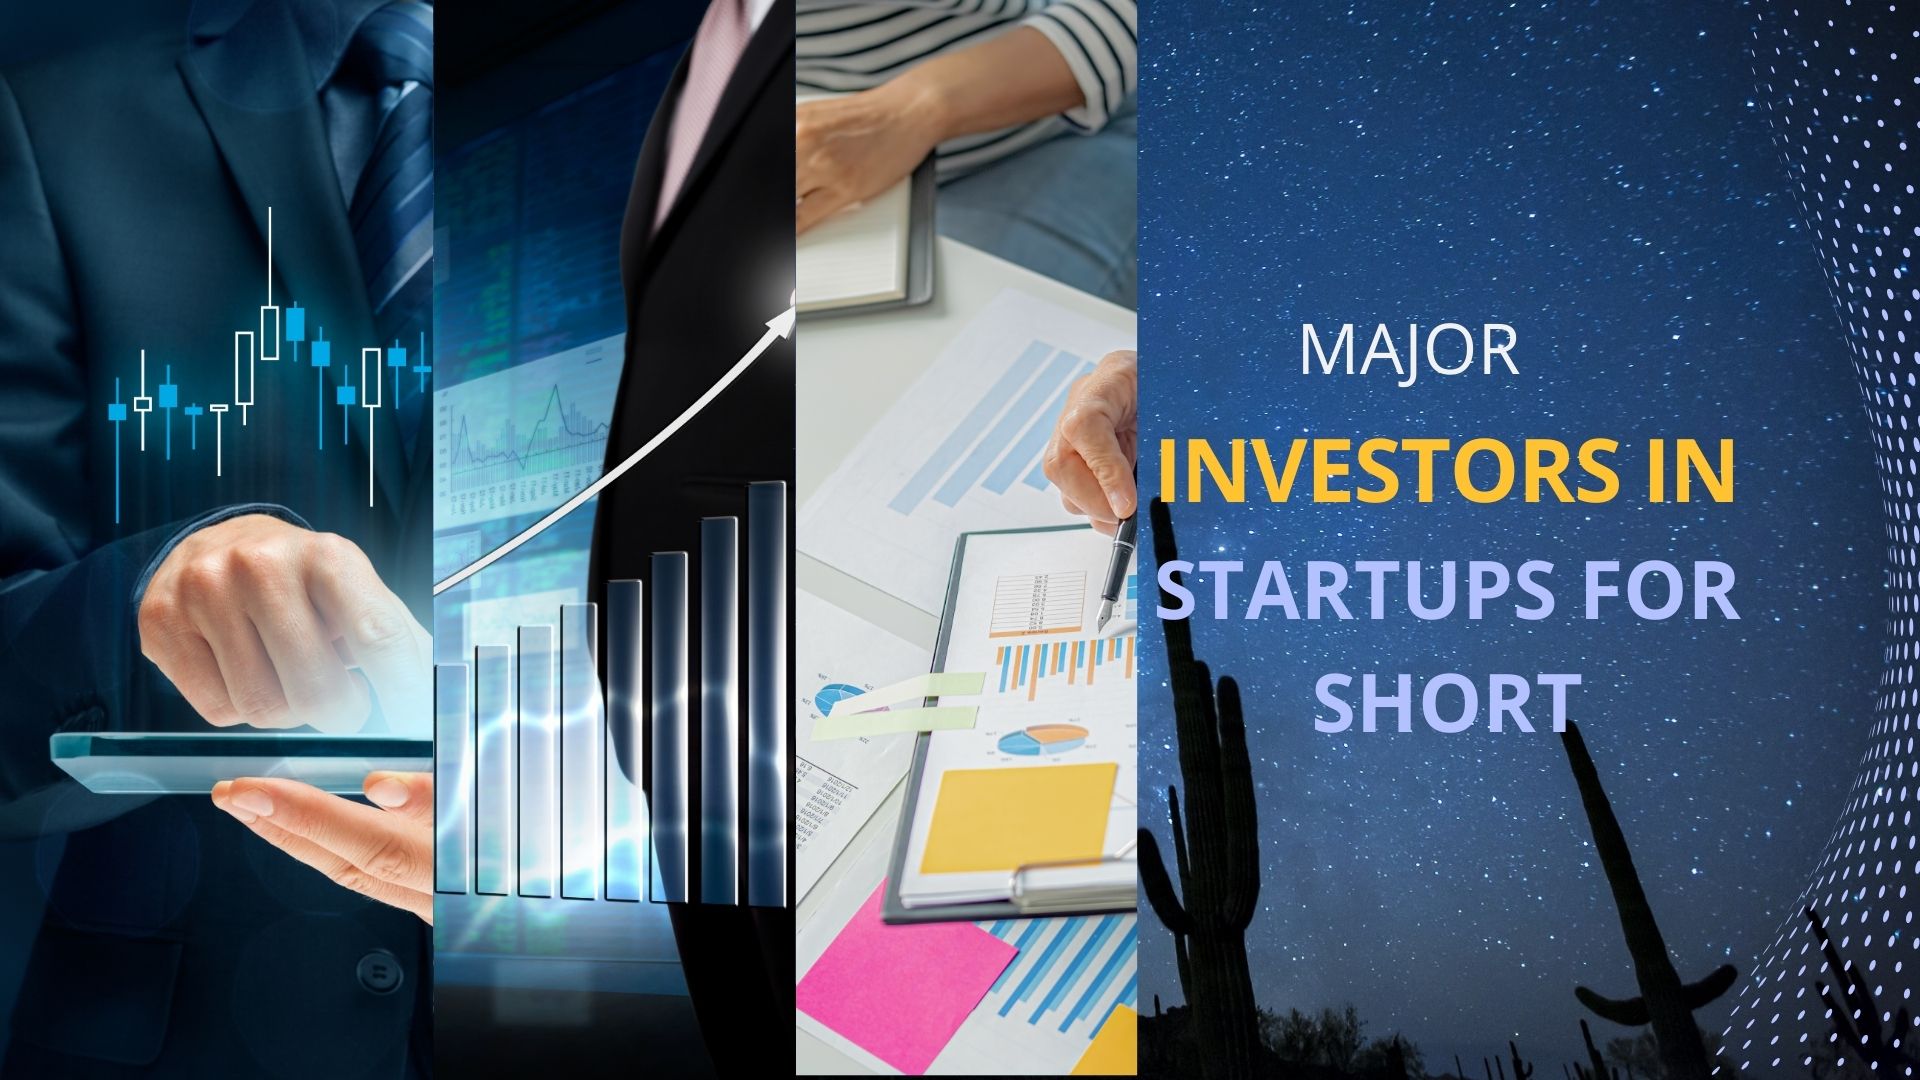 Major Investors in Startups for Short